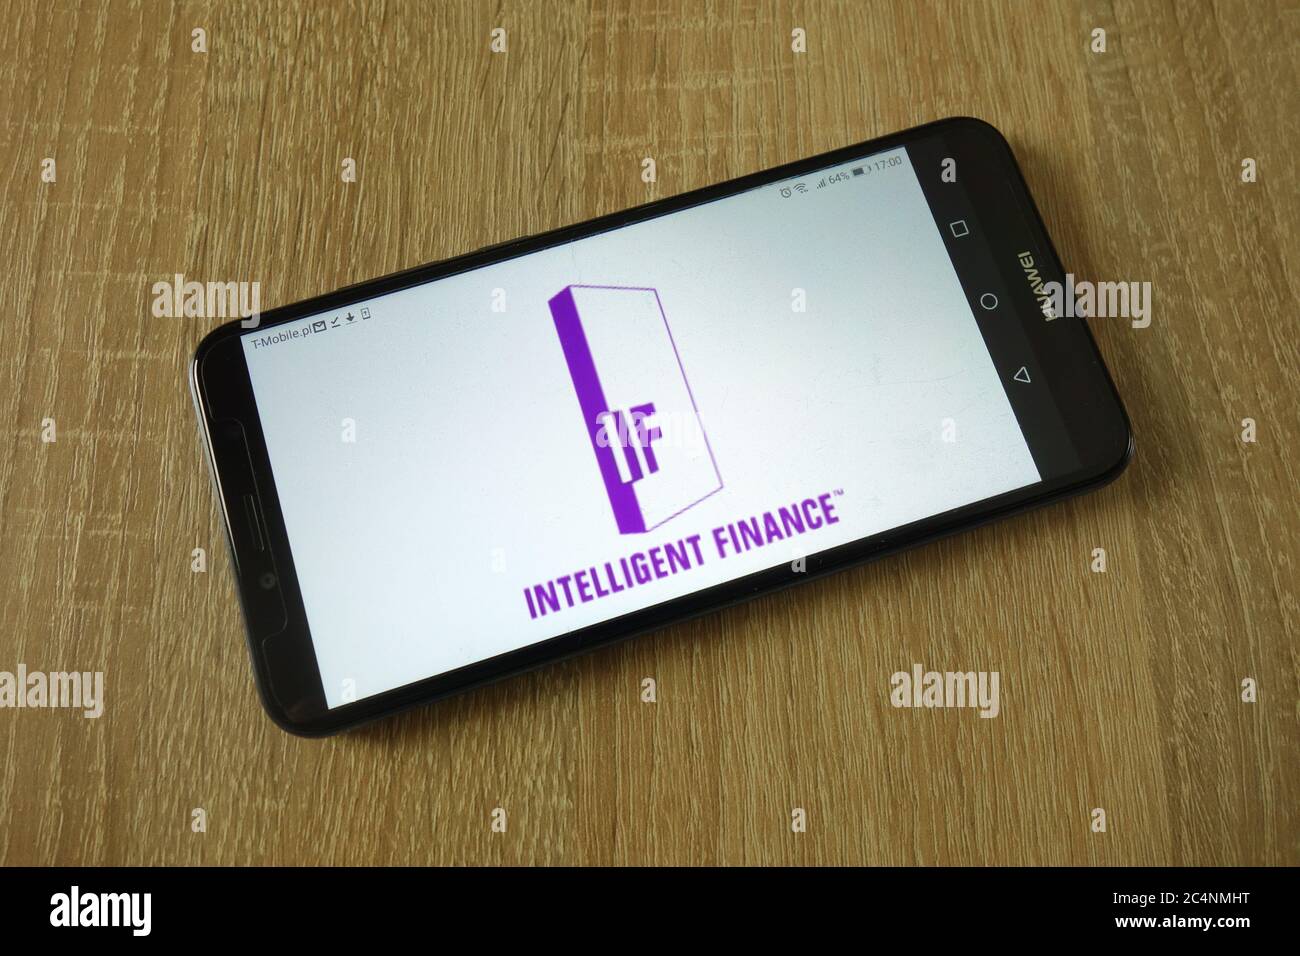 Intelligent Finance (IF) logo displayed on smartphone Stock Photo